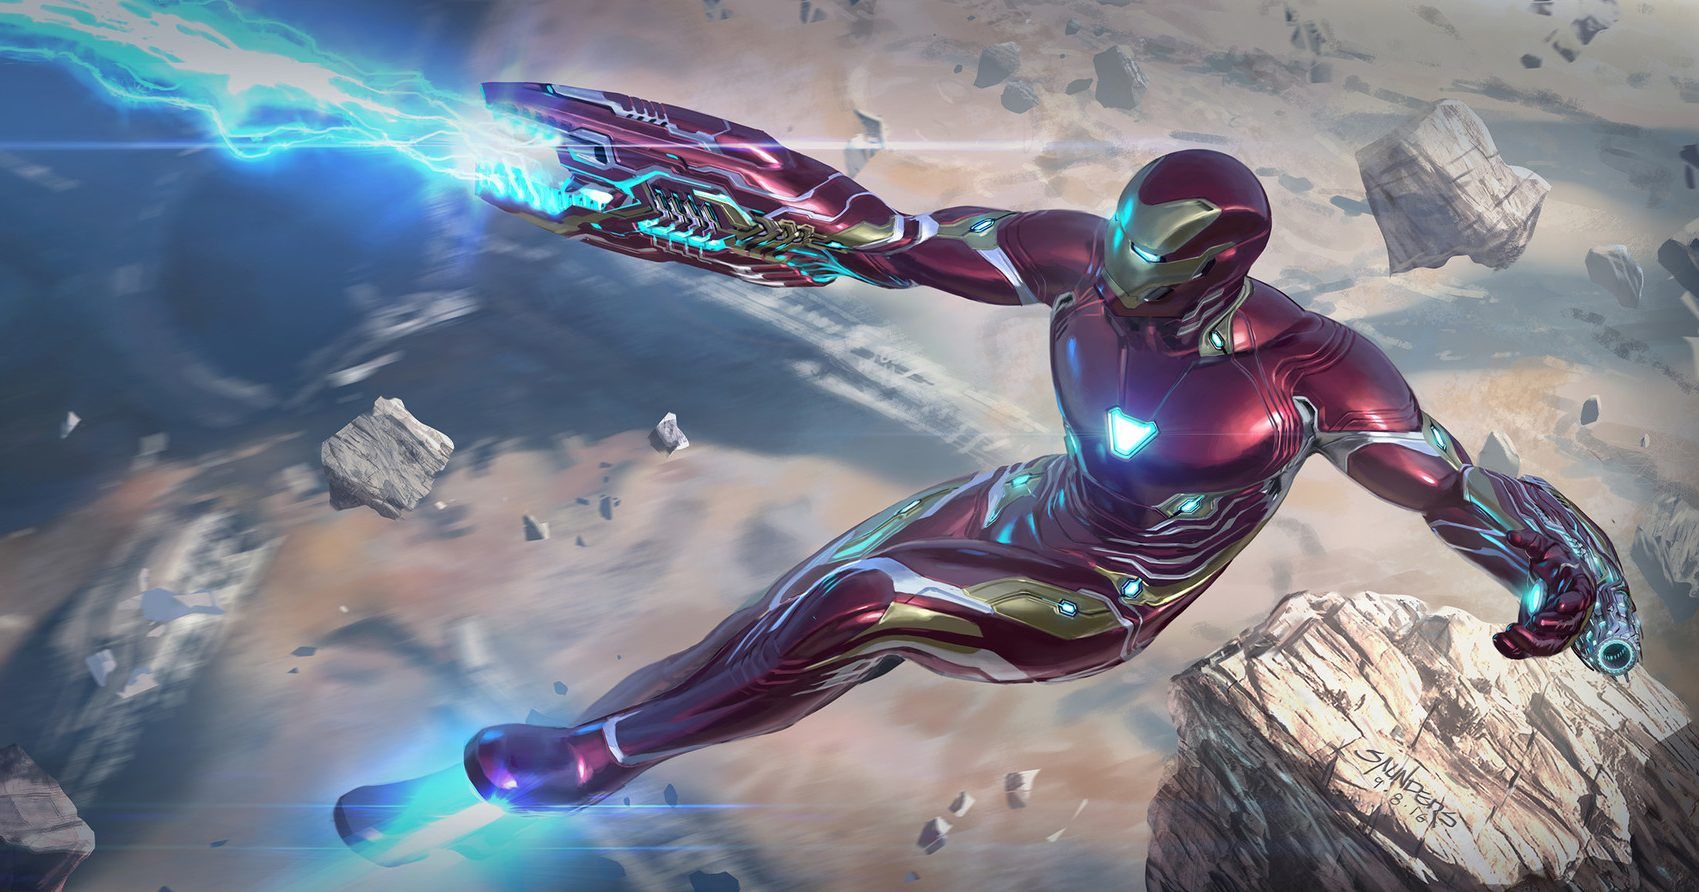 Iron Man 10 Secrets About The Bleeding Edge Armor The MCU Never Revealed